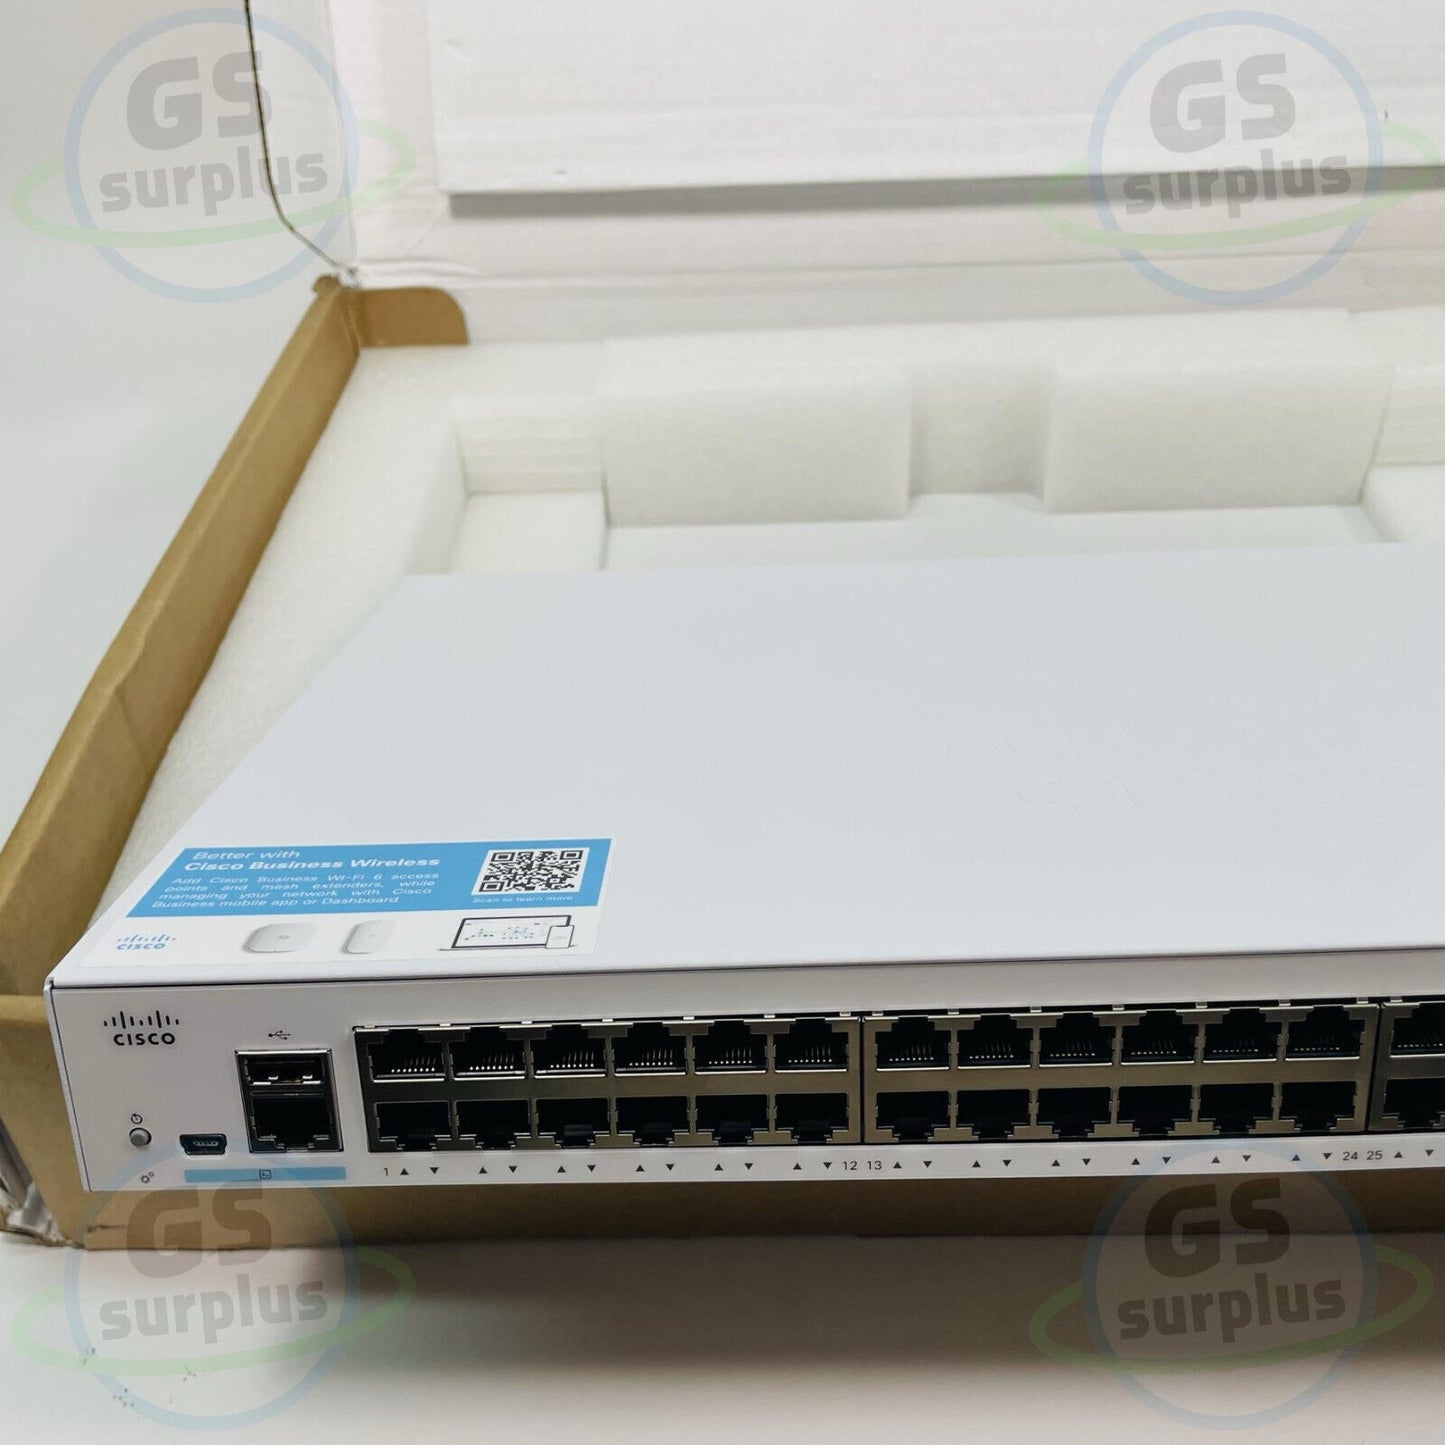 New Damaged Cisco CBS350-48T-4X Ethernet Switch